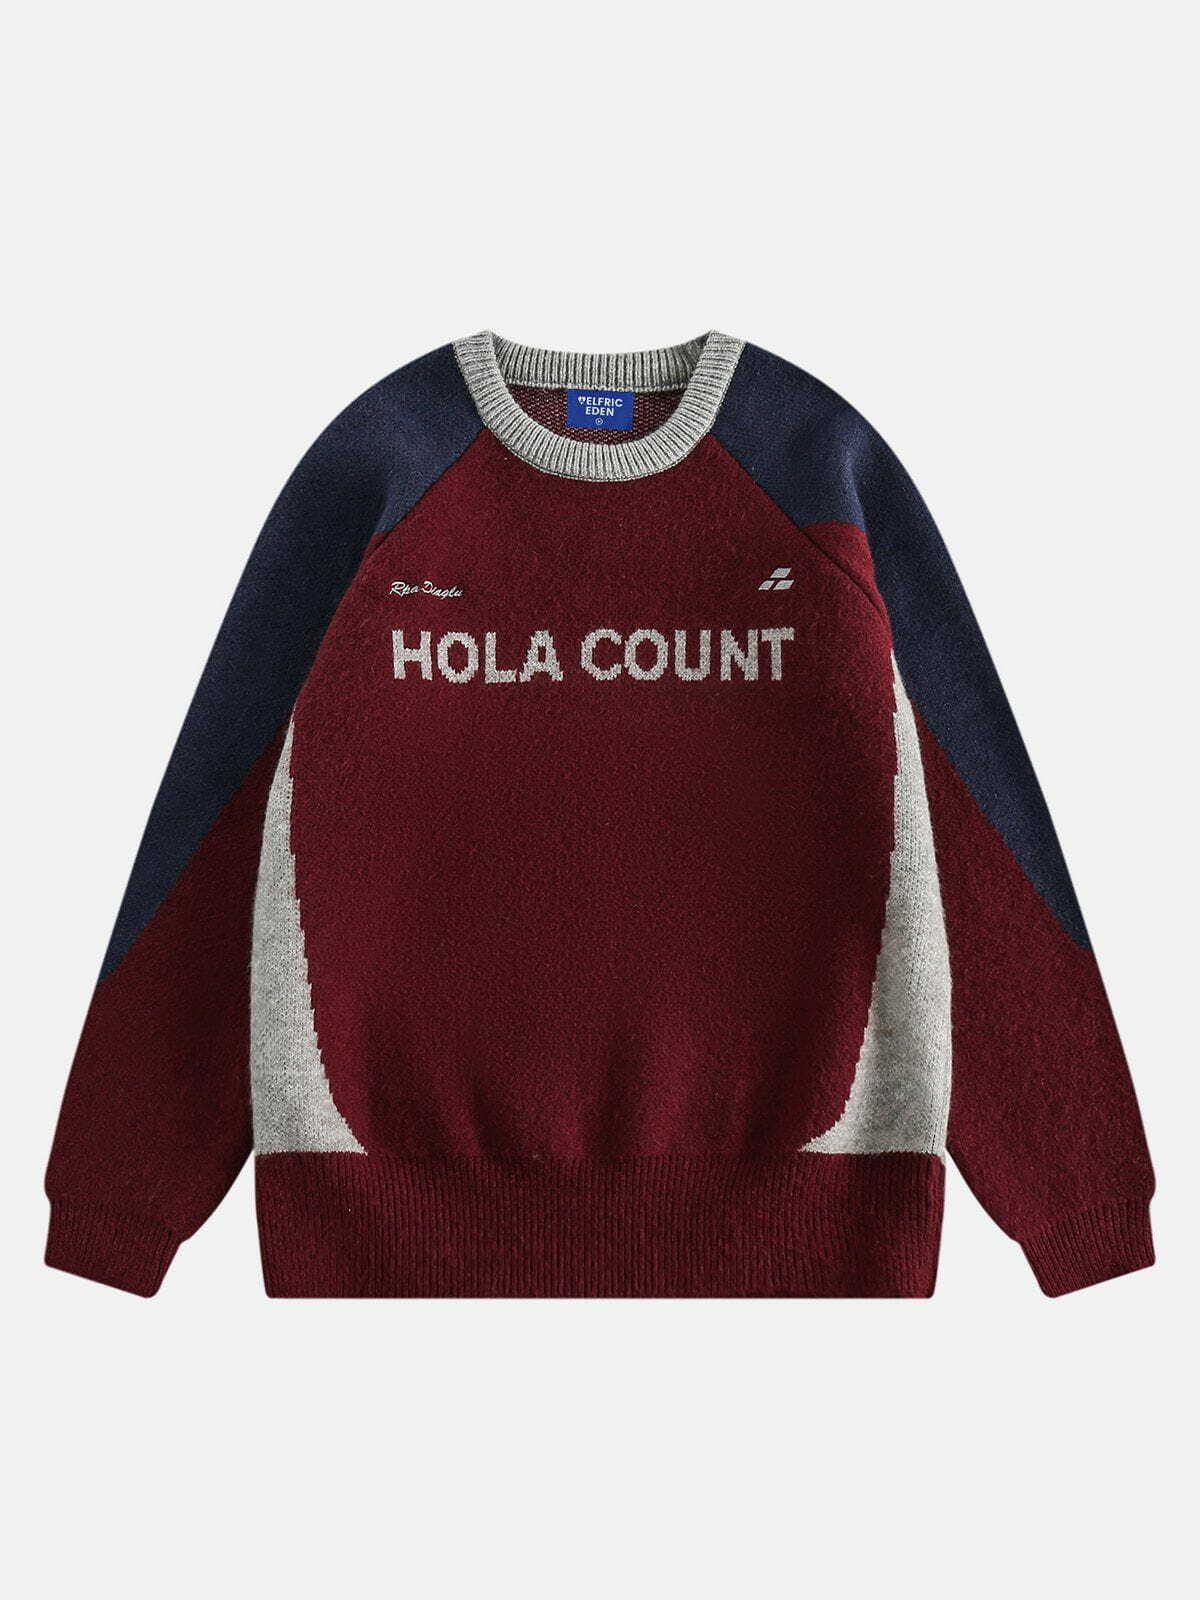 bold color block sweater   youthful & trendy streetwear 5668